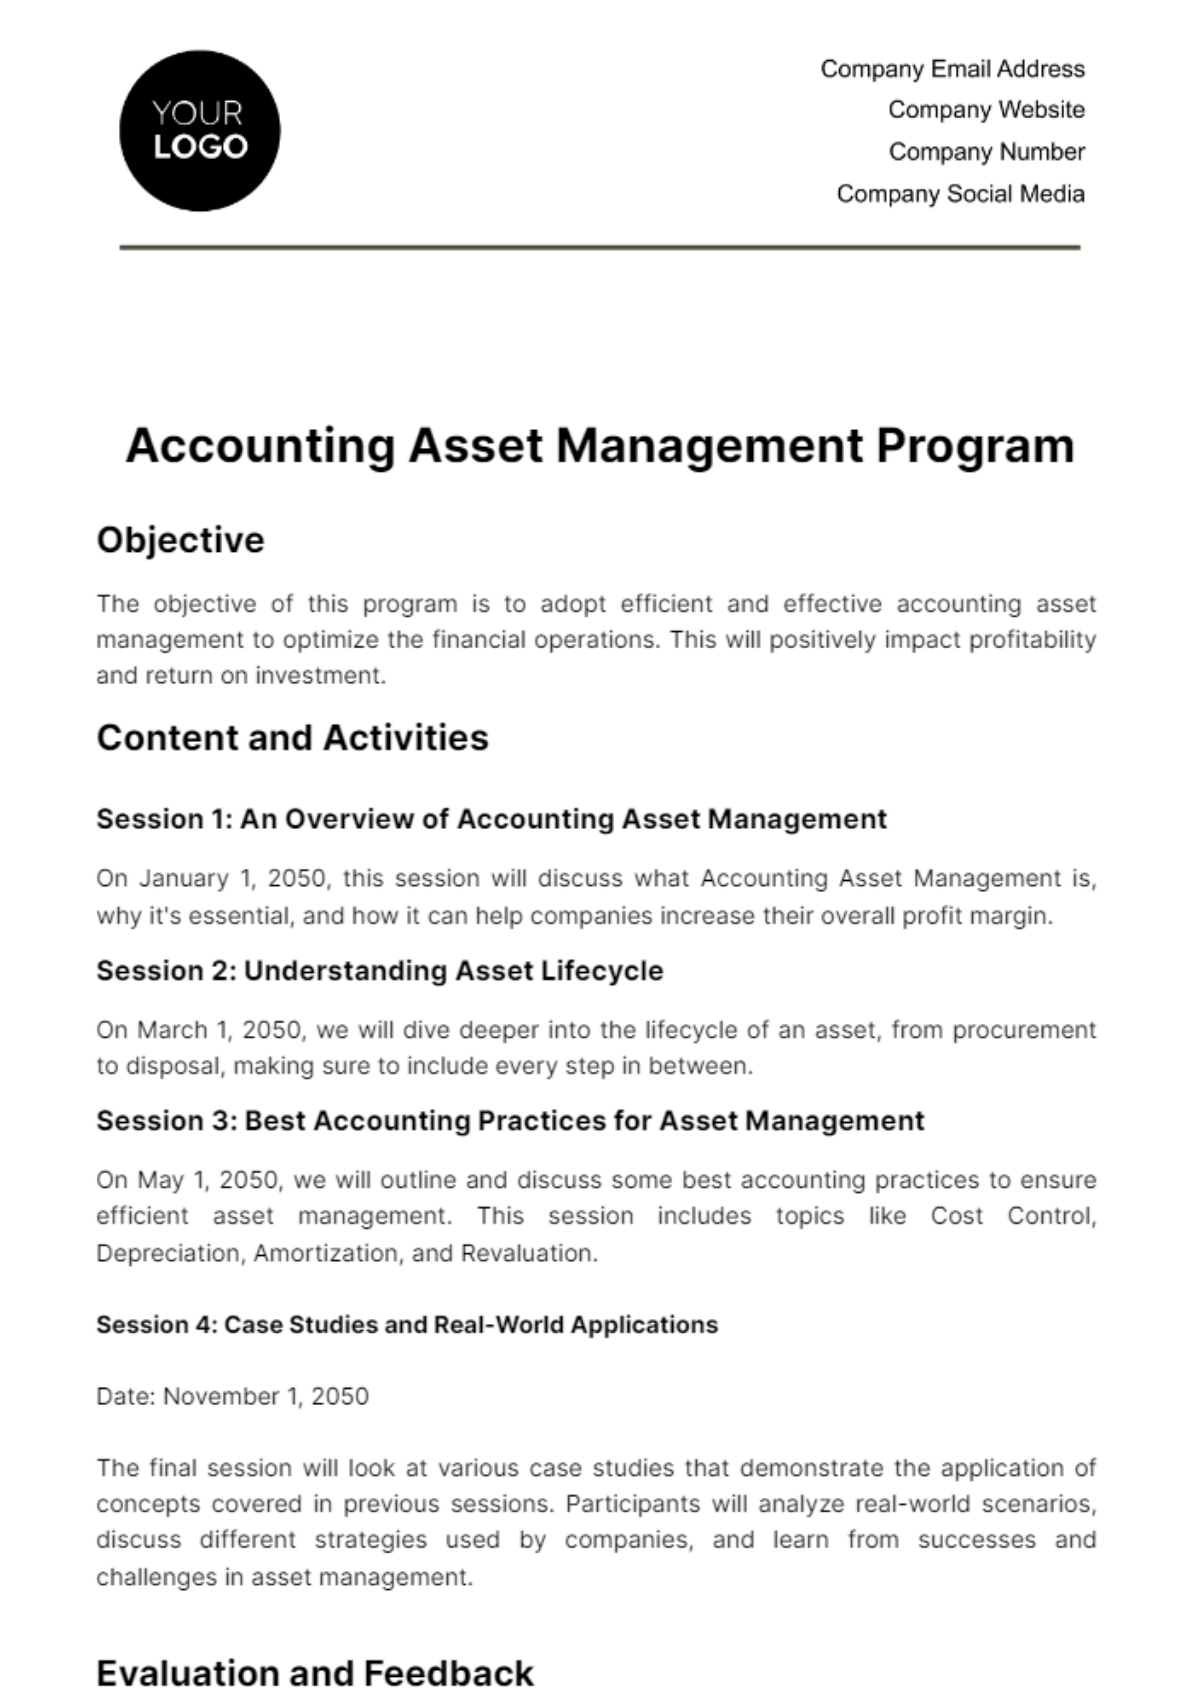 Accounting Asset Management Program Template